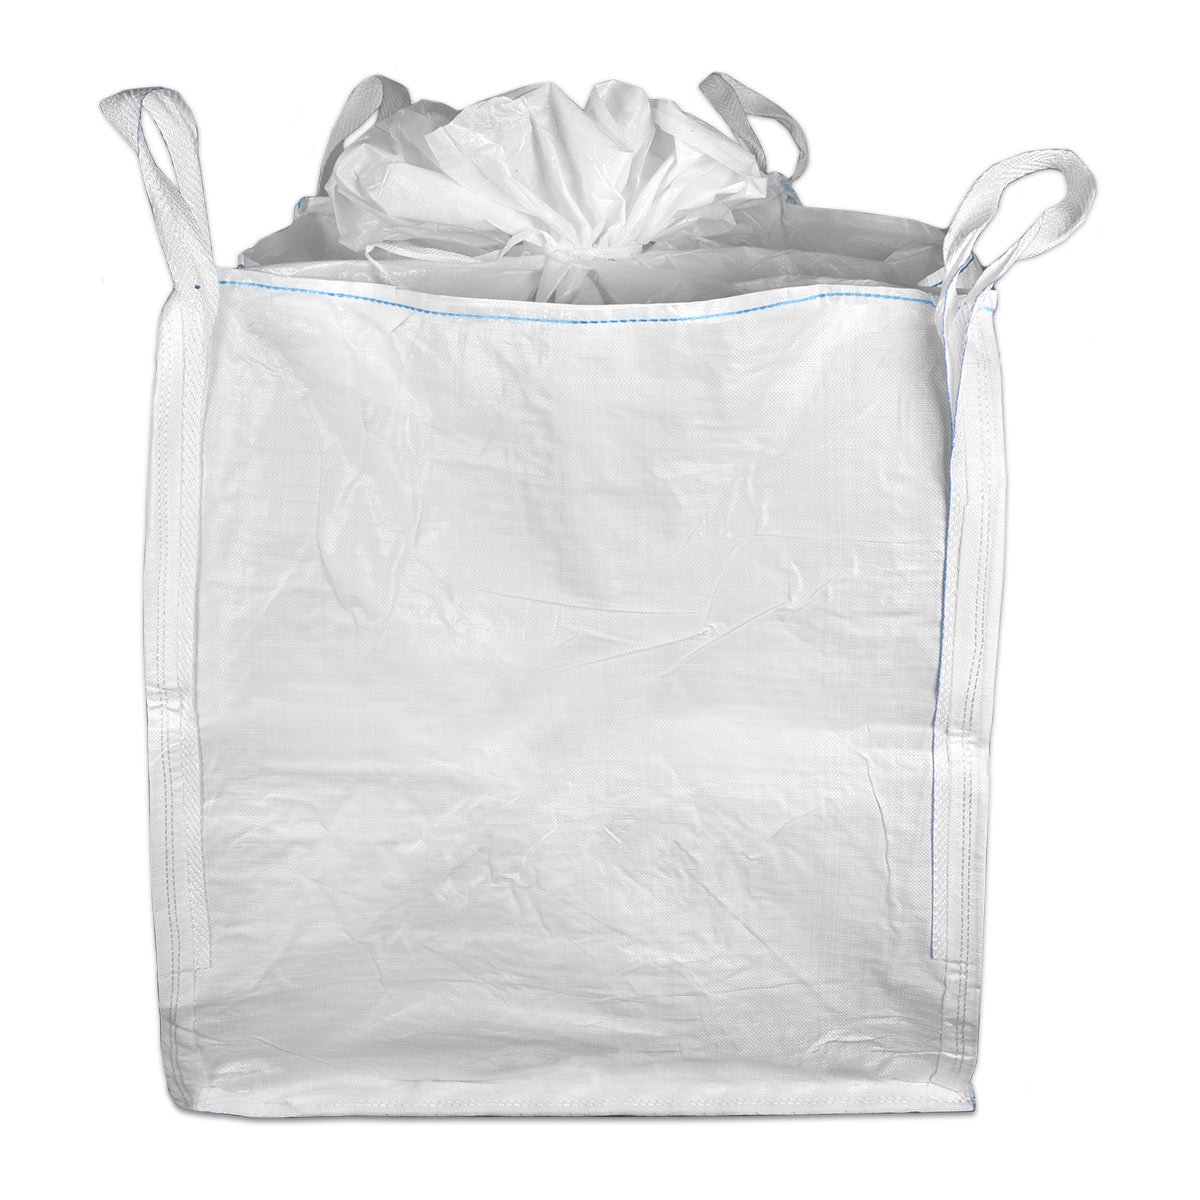 Wholesale Vinyl Bags, Phthalate free/prop 65 compliant